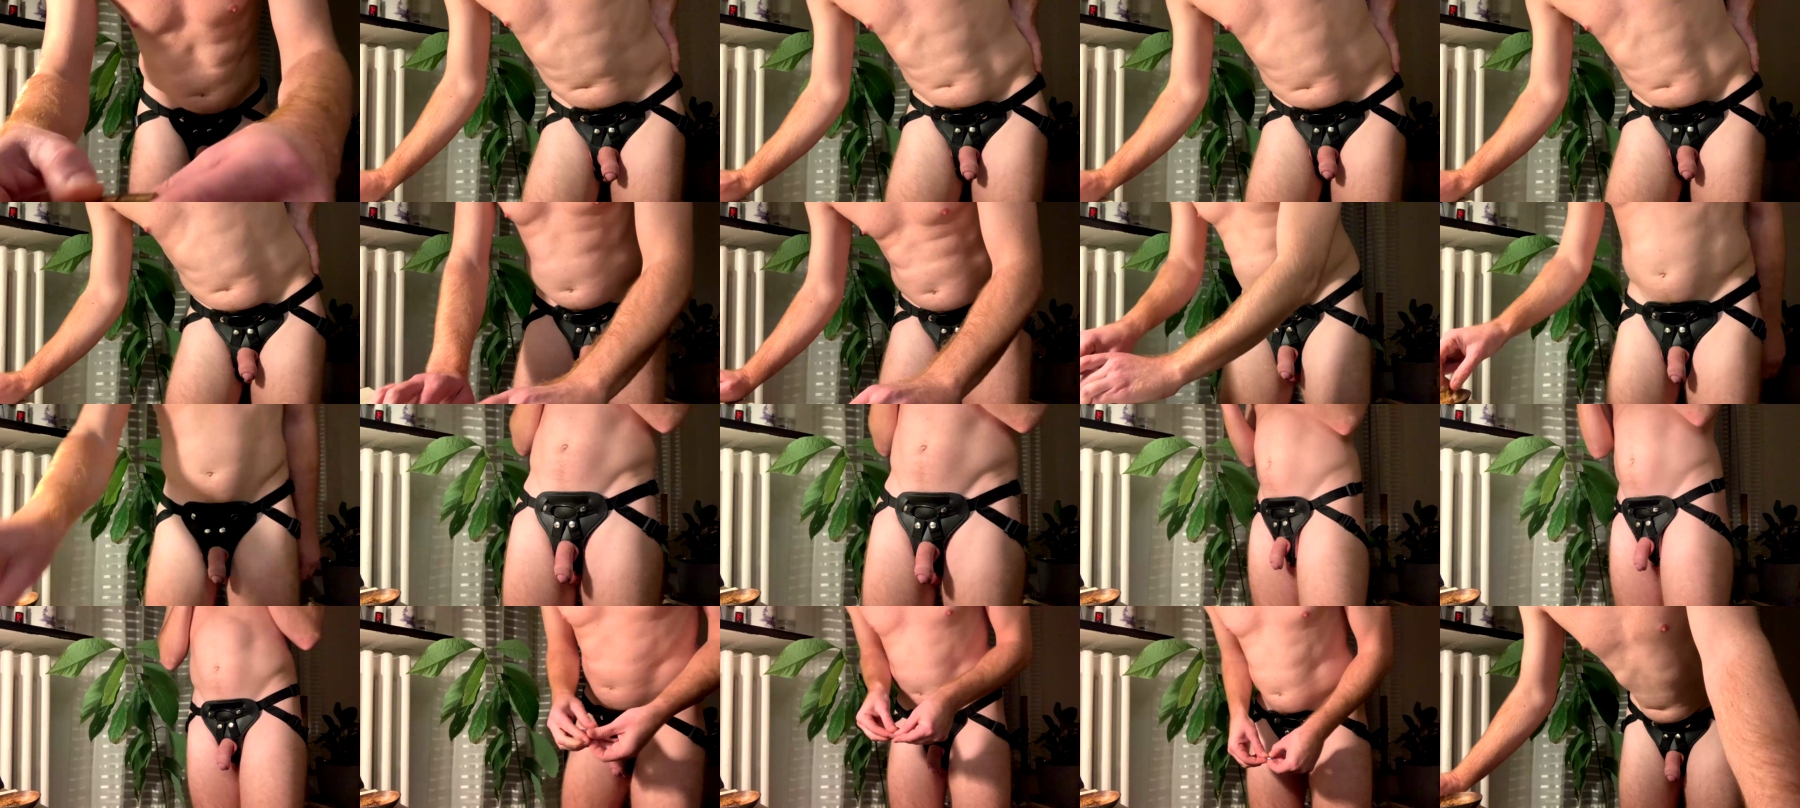 4cidman  07-10-2021 Male Topless